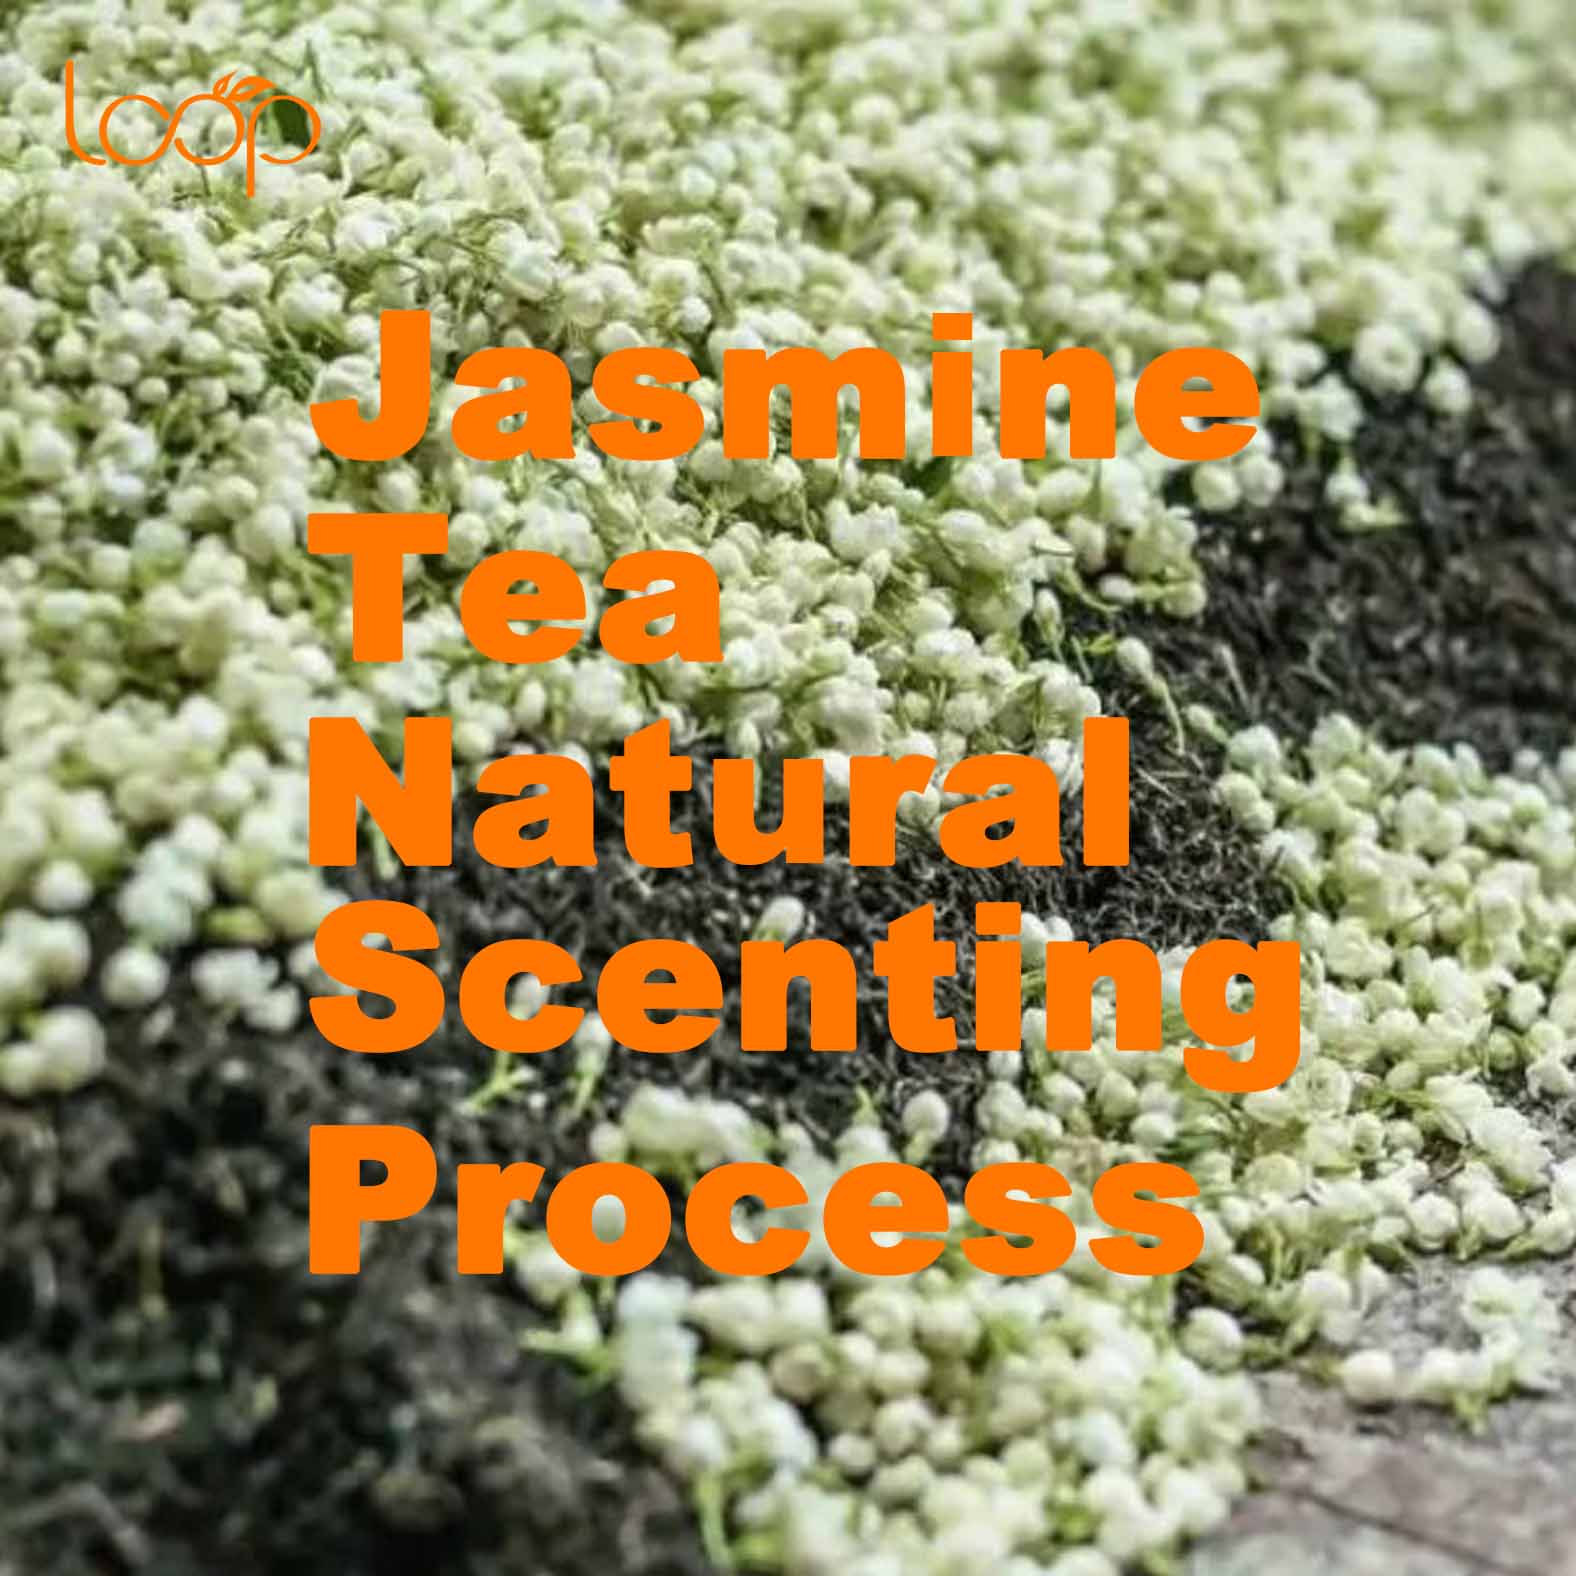 Jasmine Tea Natural Scenting Process